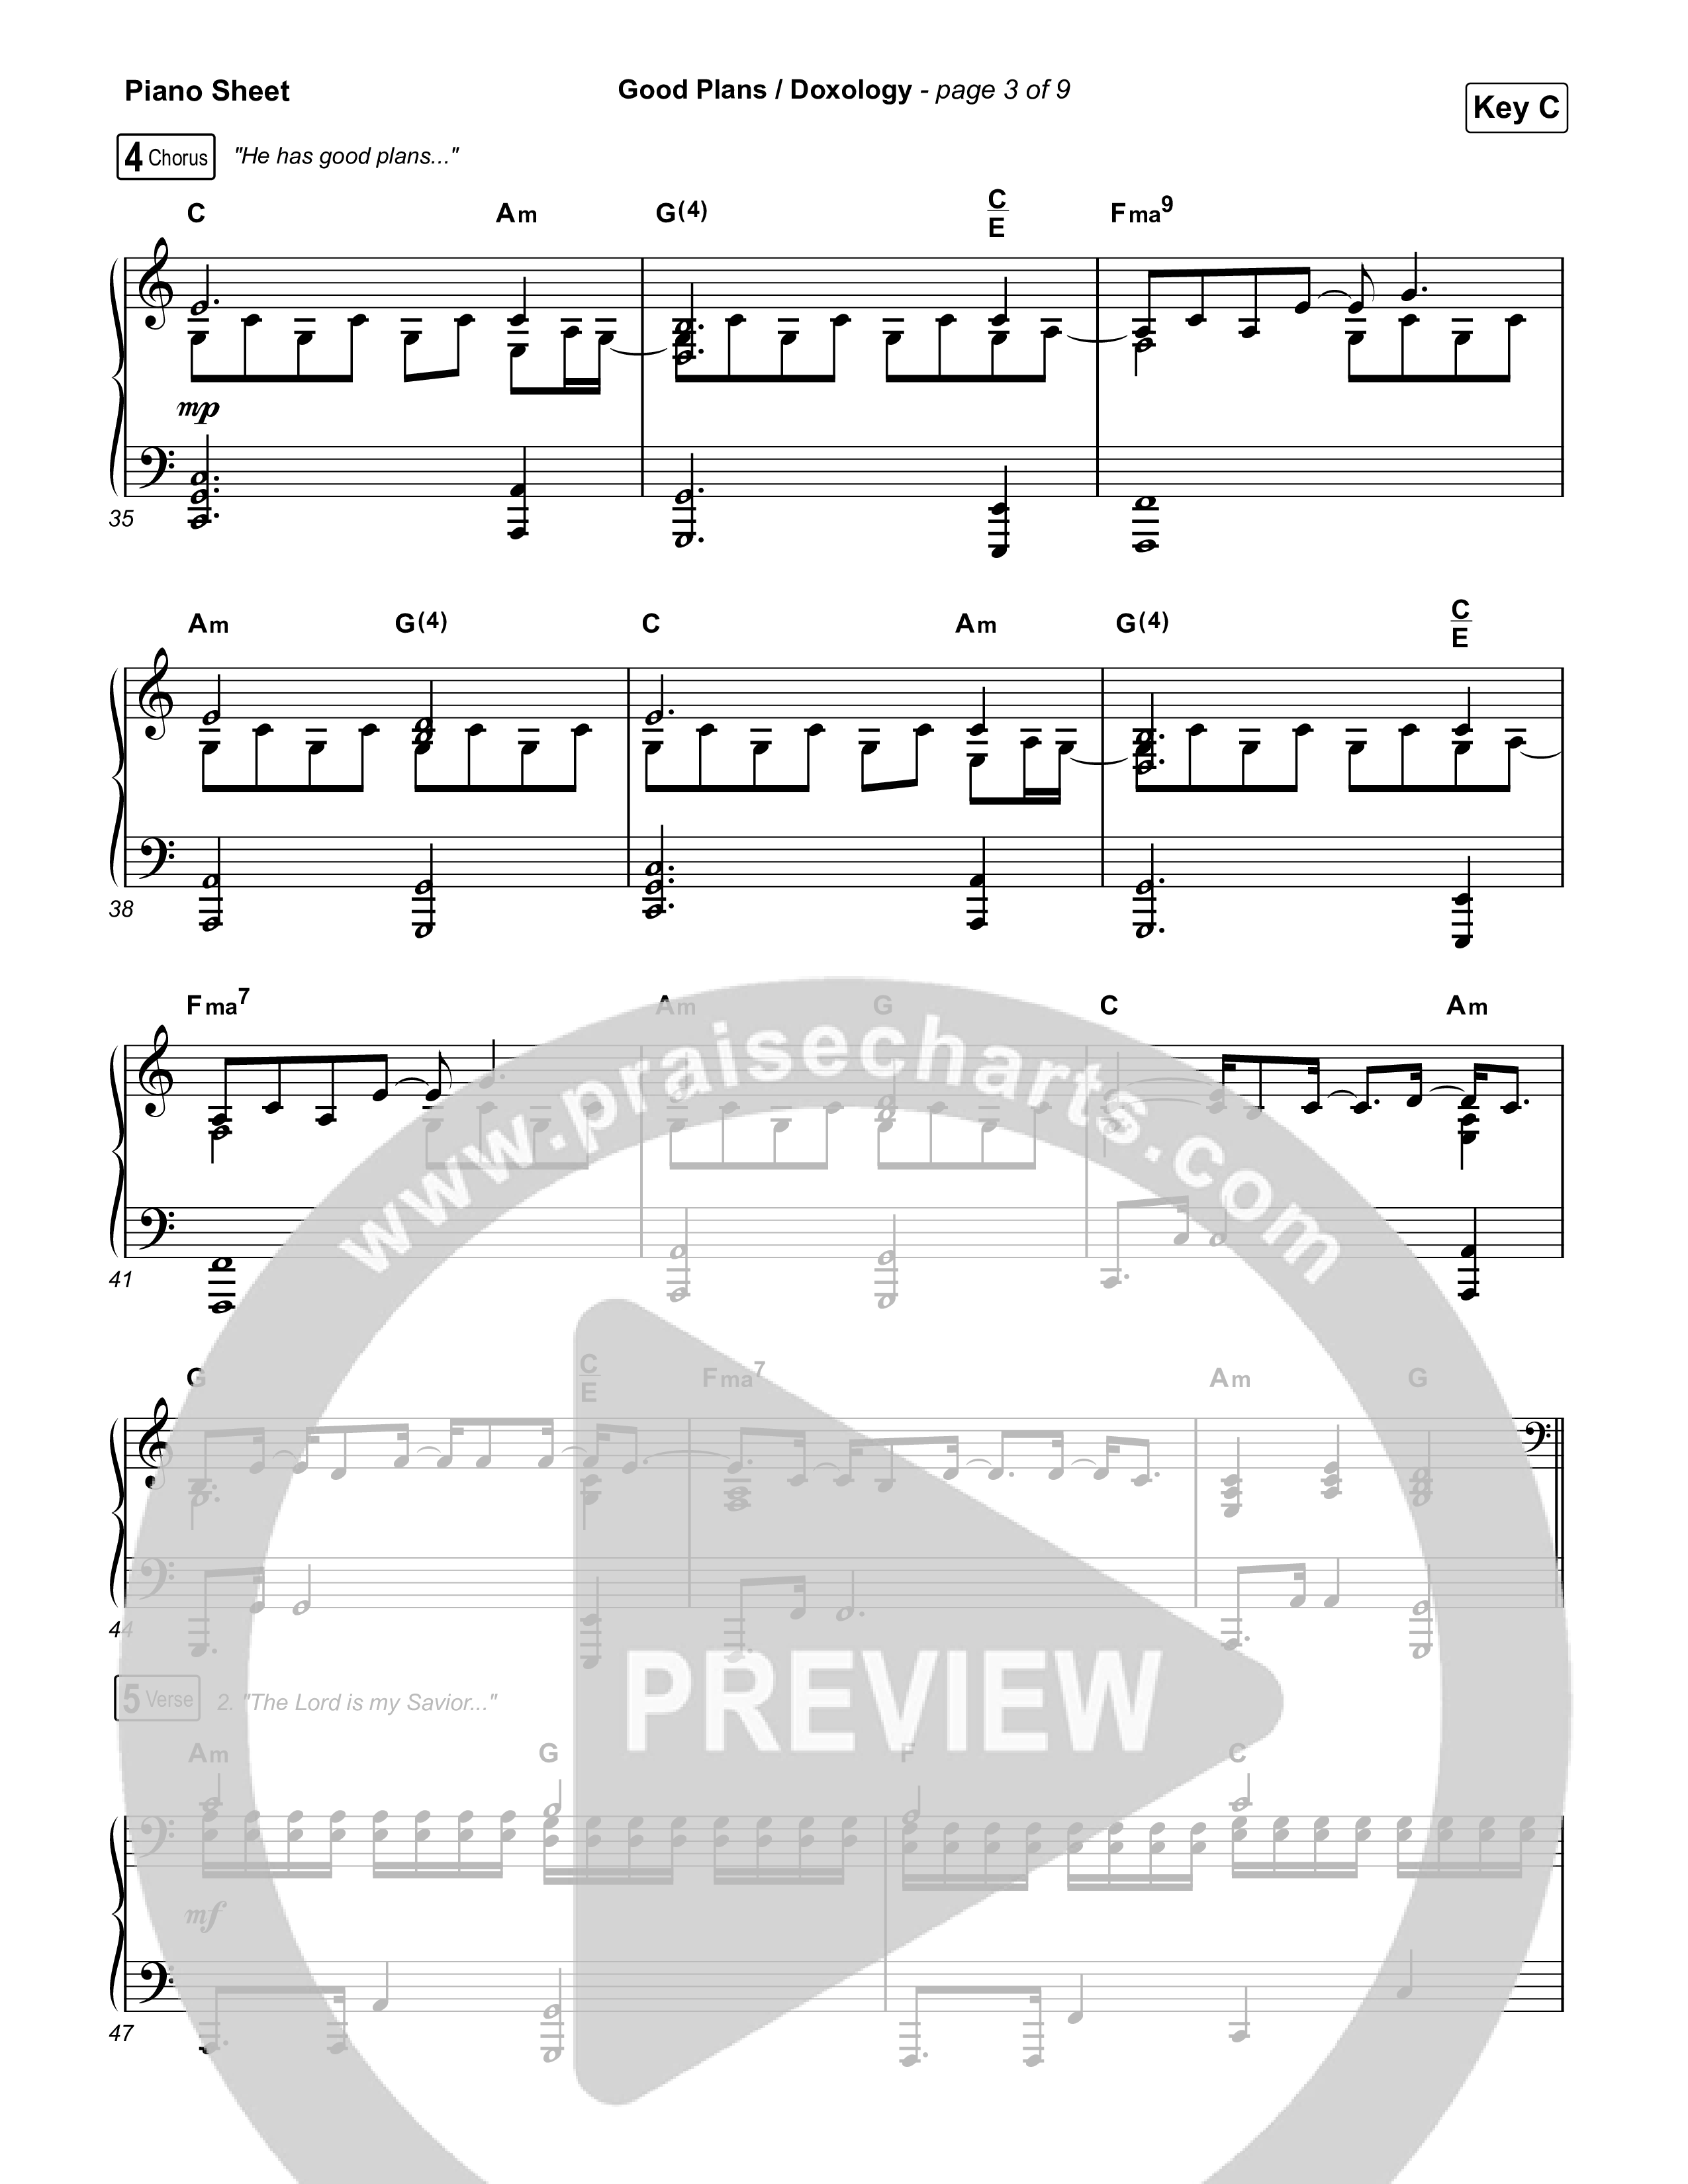 Good Plans/Doxology Piano Sheet (Red Rocks Worship)